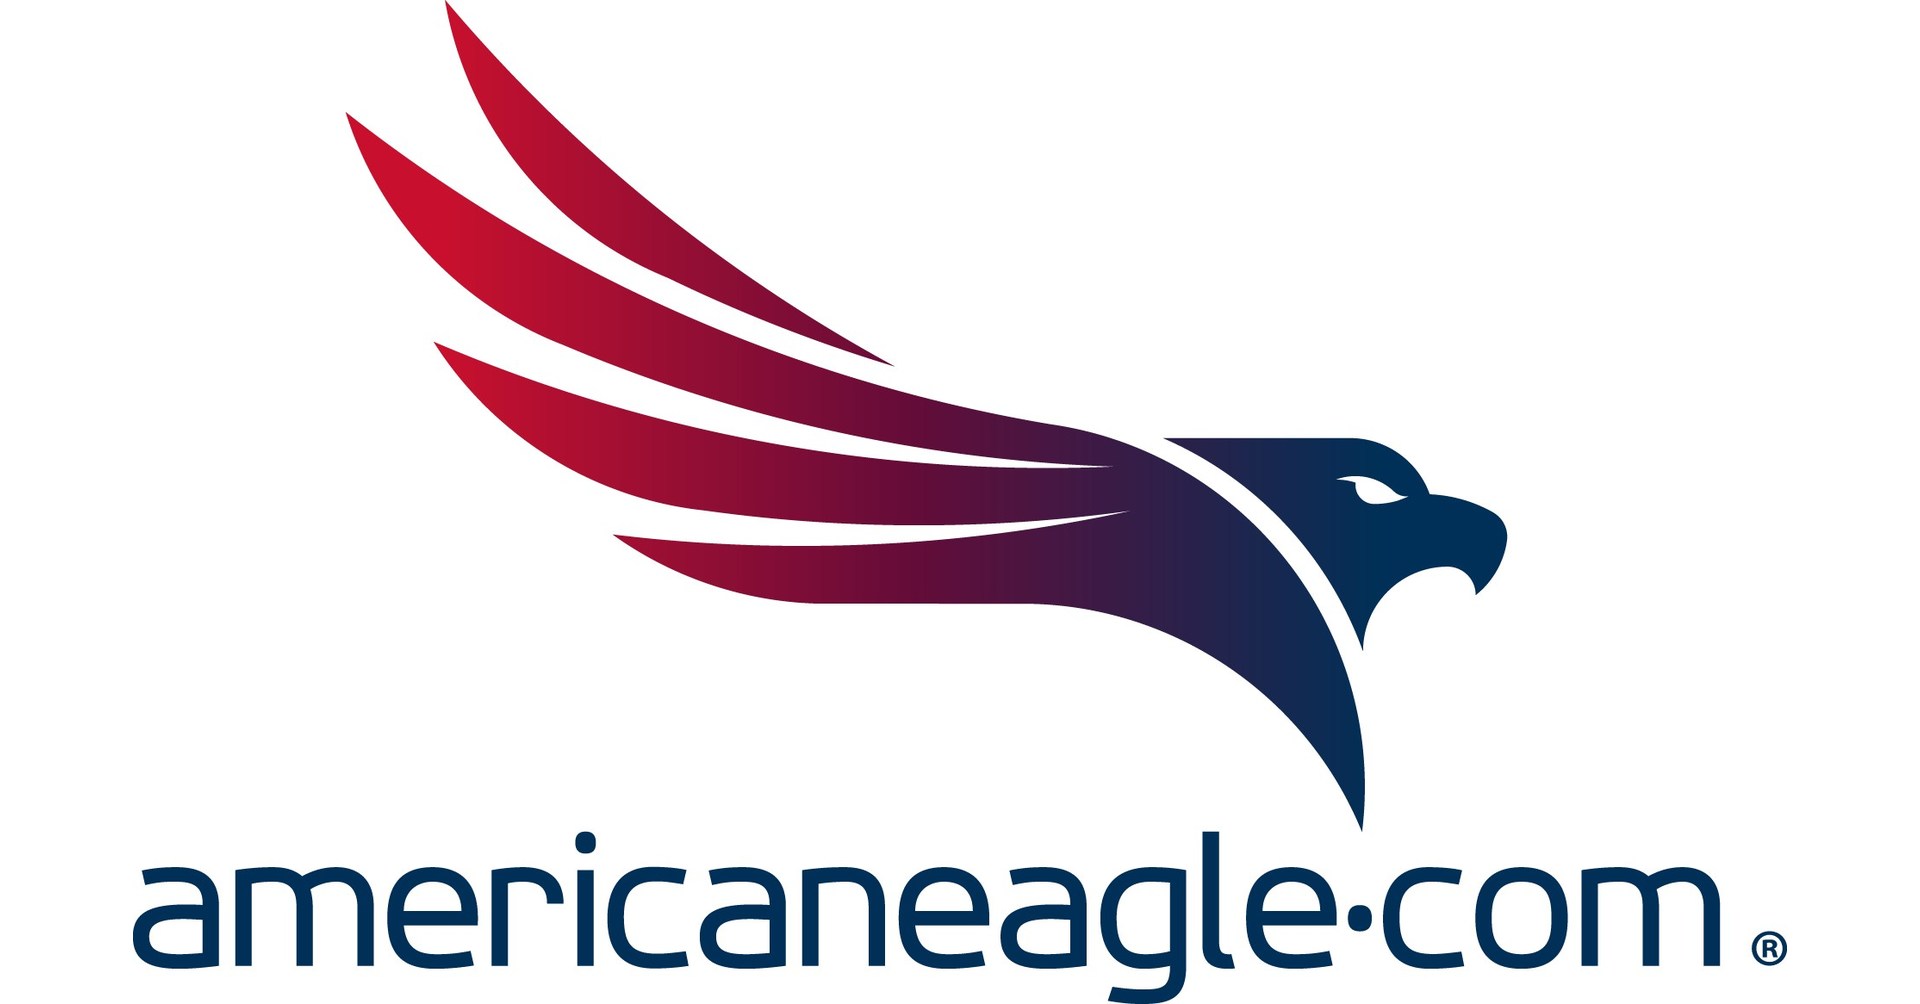 Americaneagle.com Client Wins 2021 eHealthcare Leadership Award